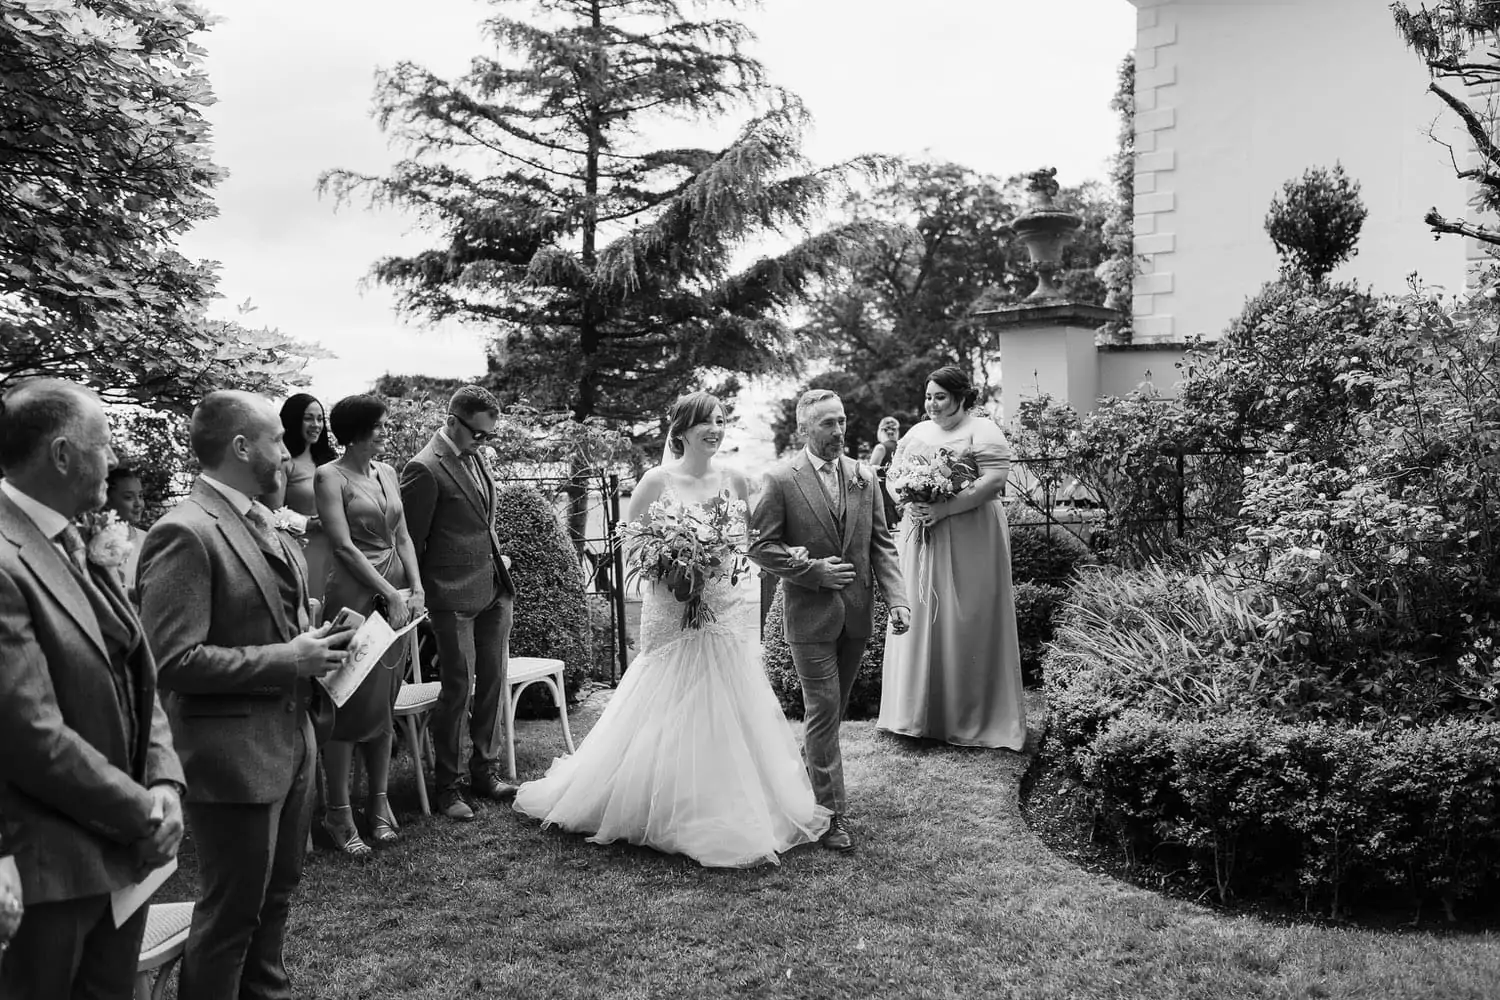 Gileston Manor wedding ceremony outdoors